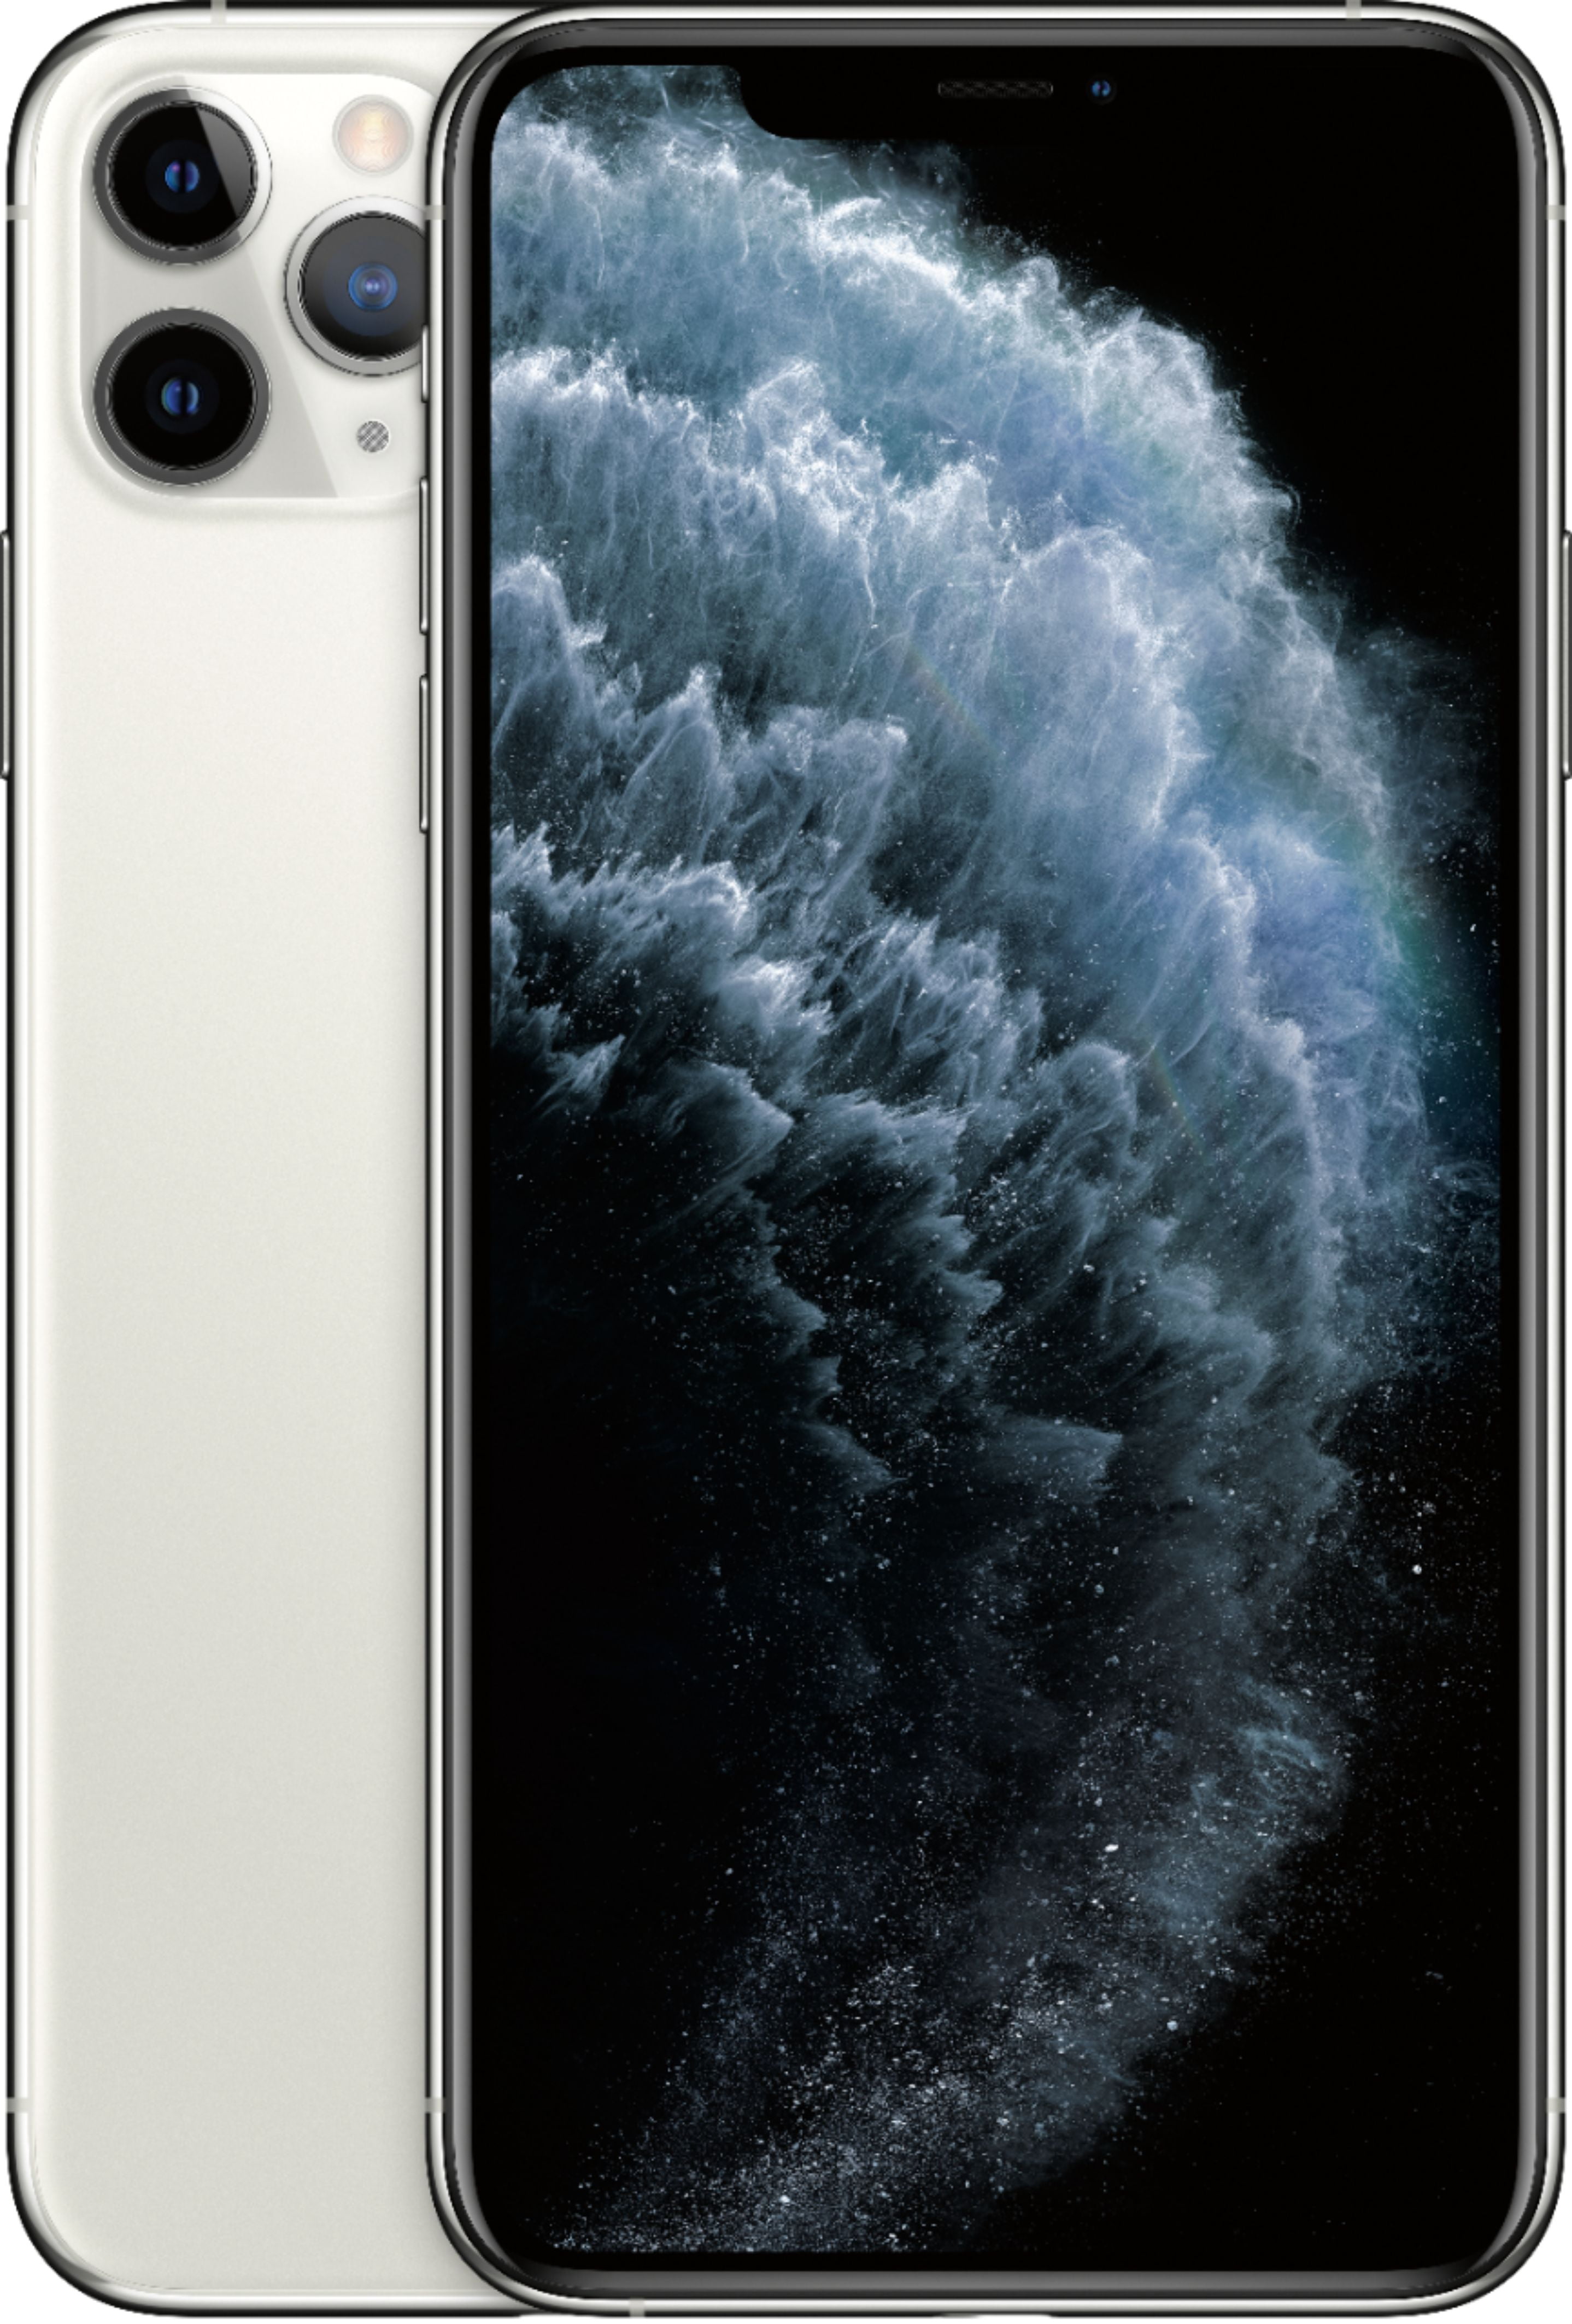 Apple Iphone 11 Pro Max 512gb Silver Unlocked Verizon T Mobile Smartphone Walmart Com